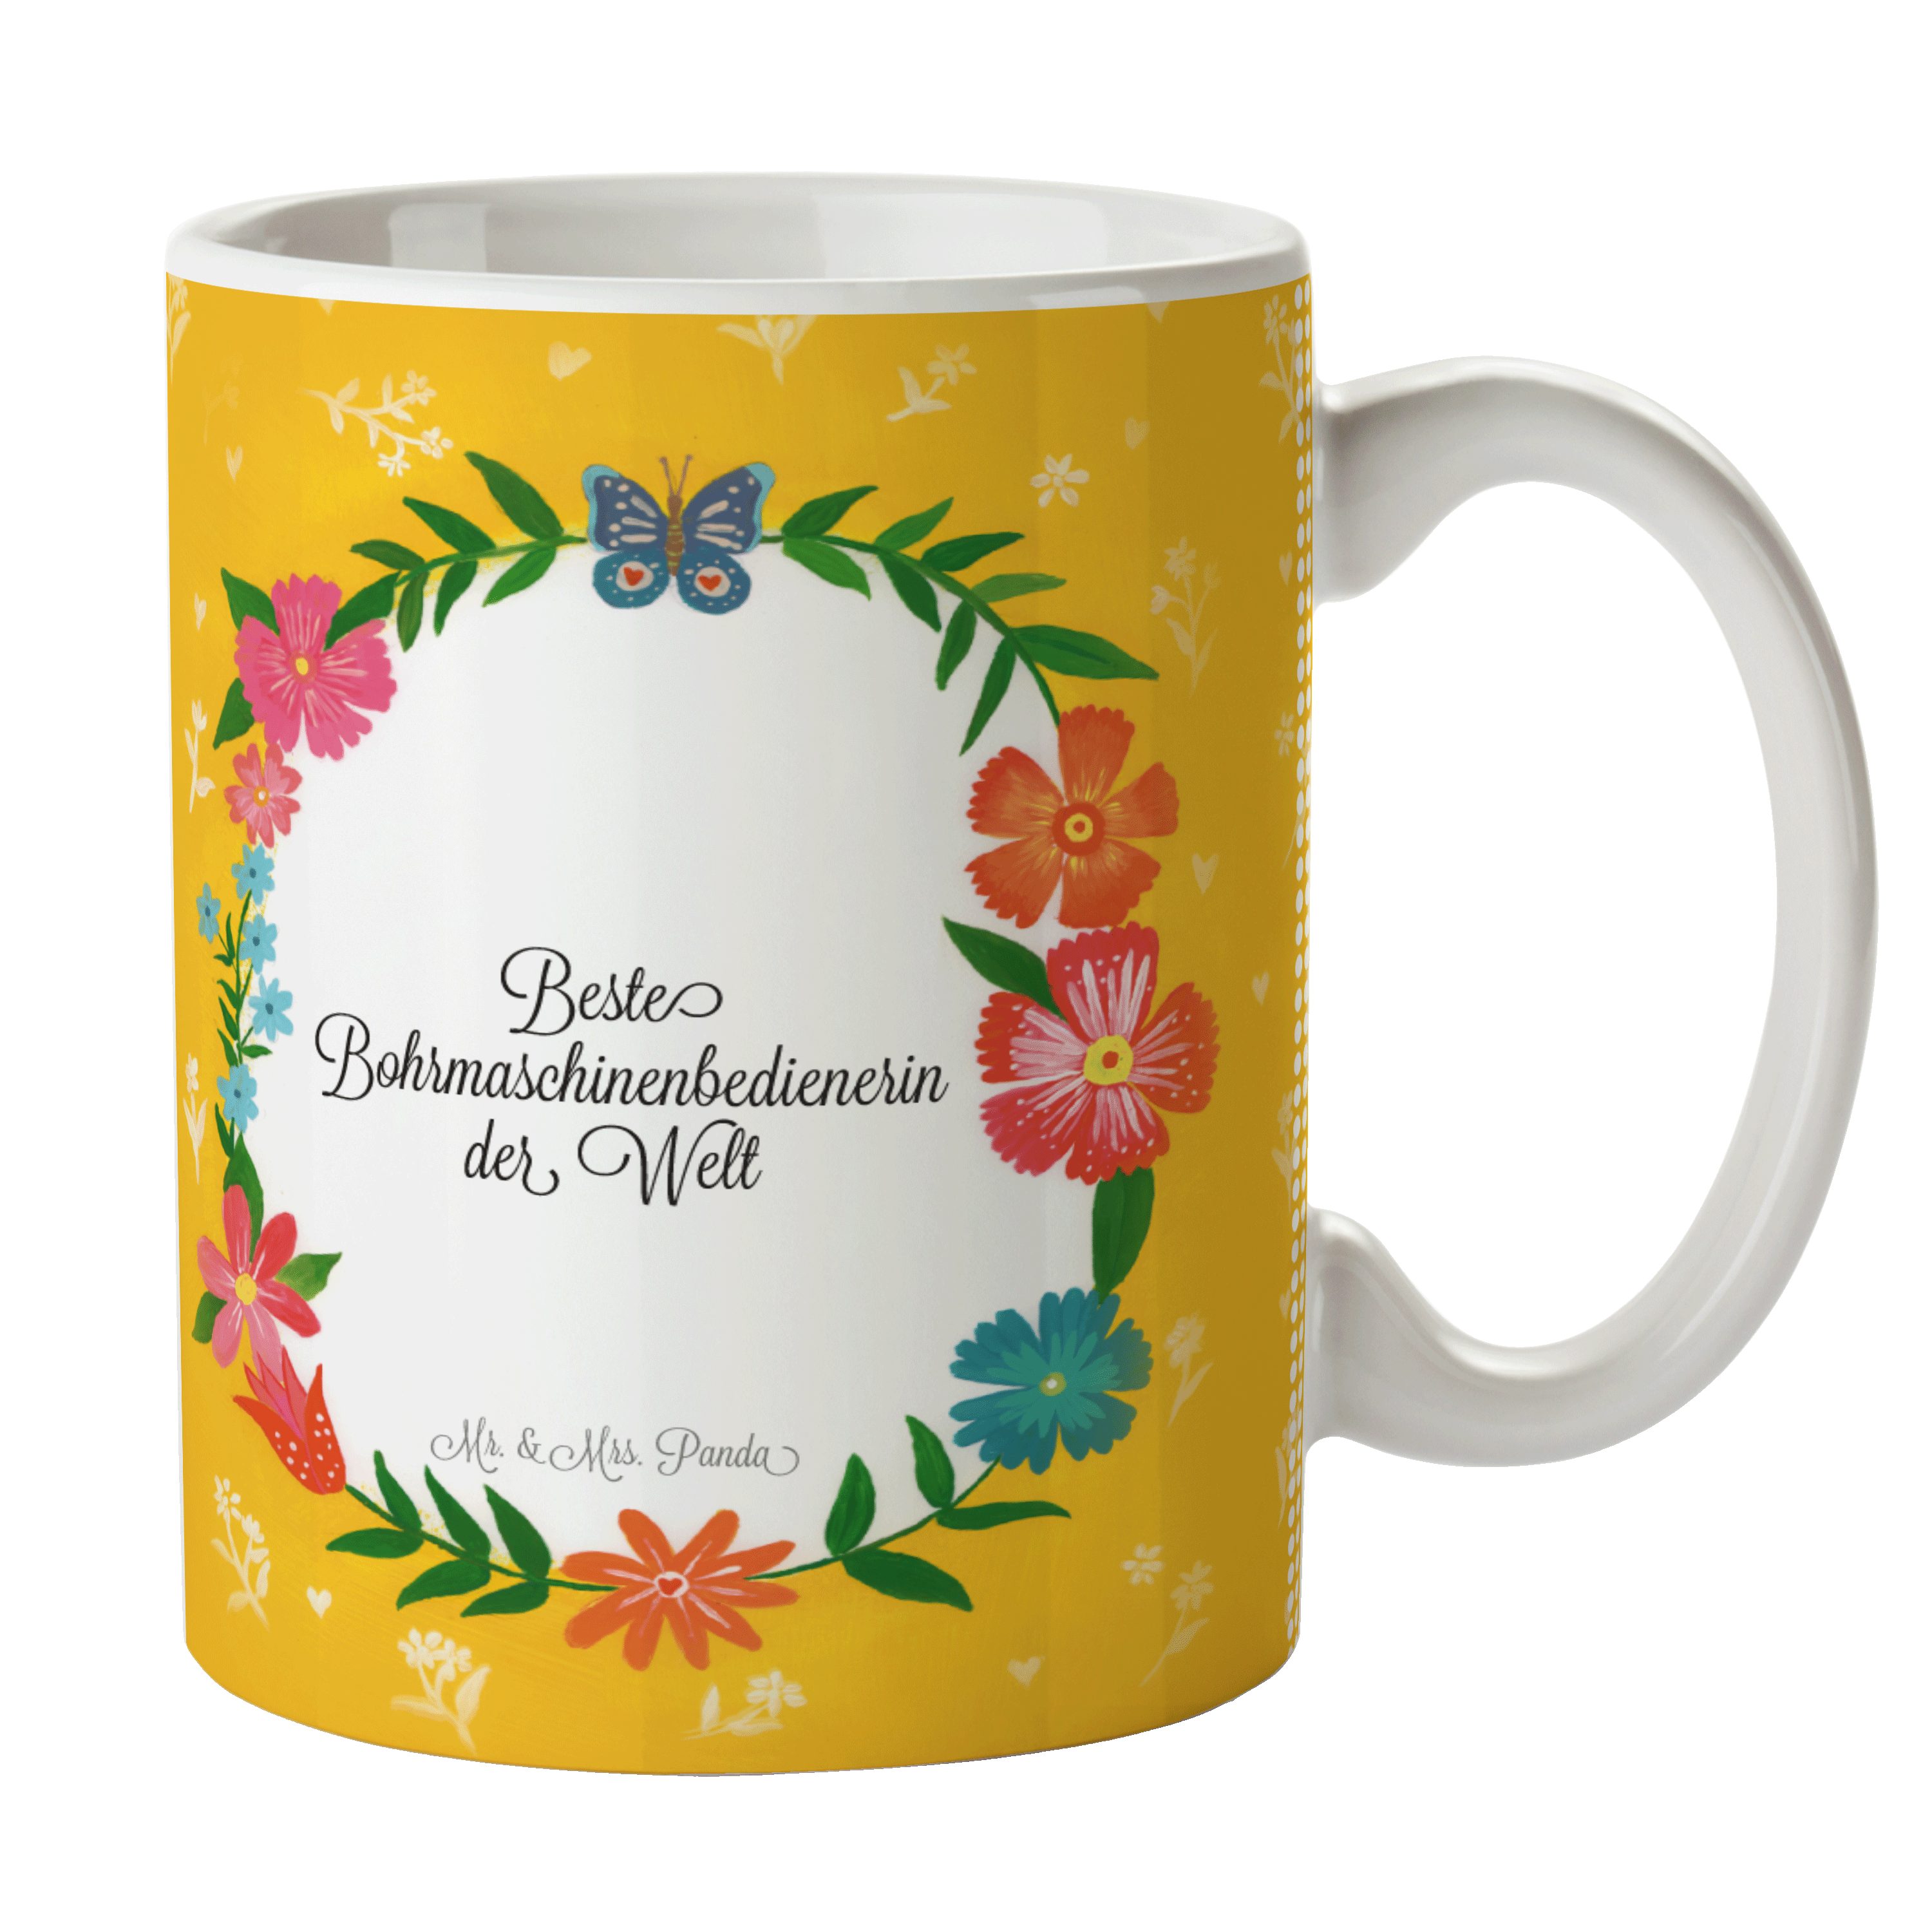 Geschenk, Keramik Geschenk Tasse, - Mrs. Bohrmaschinenbedienerin Tasse & Mr. Panda Kaffeebecher, Tas,